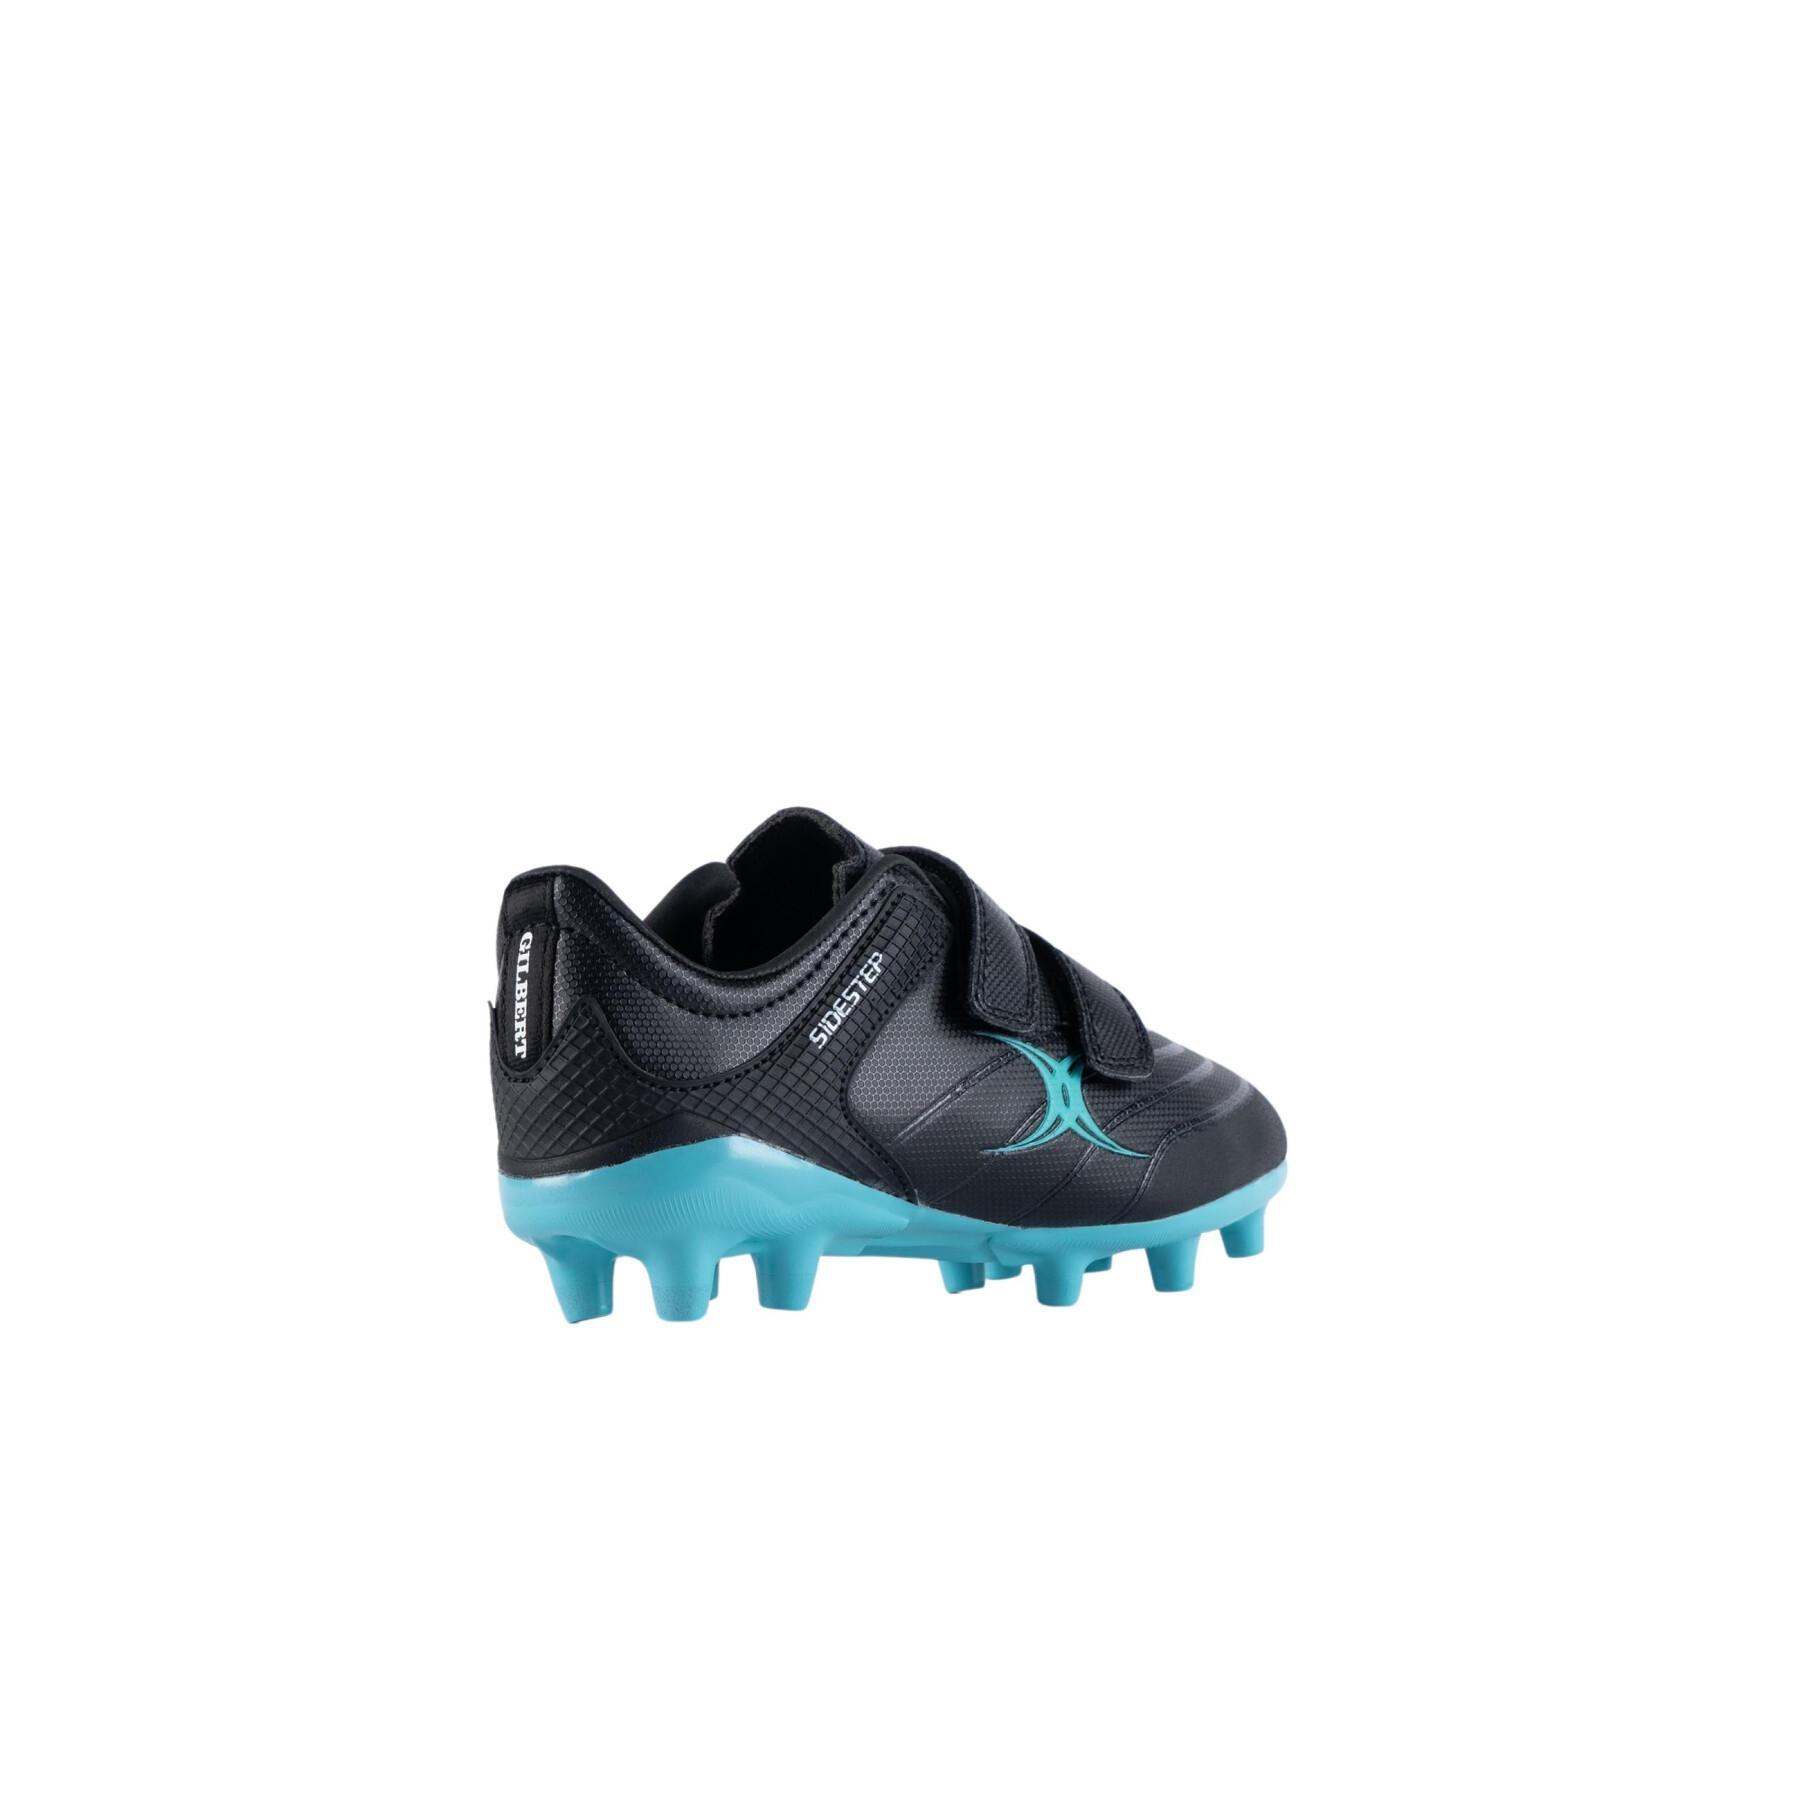 Chaussures de rugby enfant Gilbert Sidestep X15 LO MSX